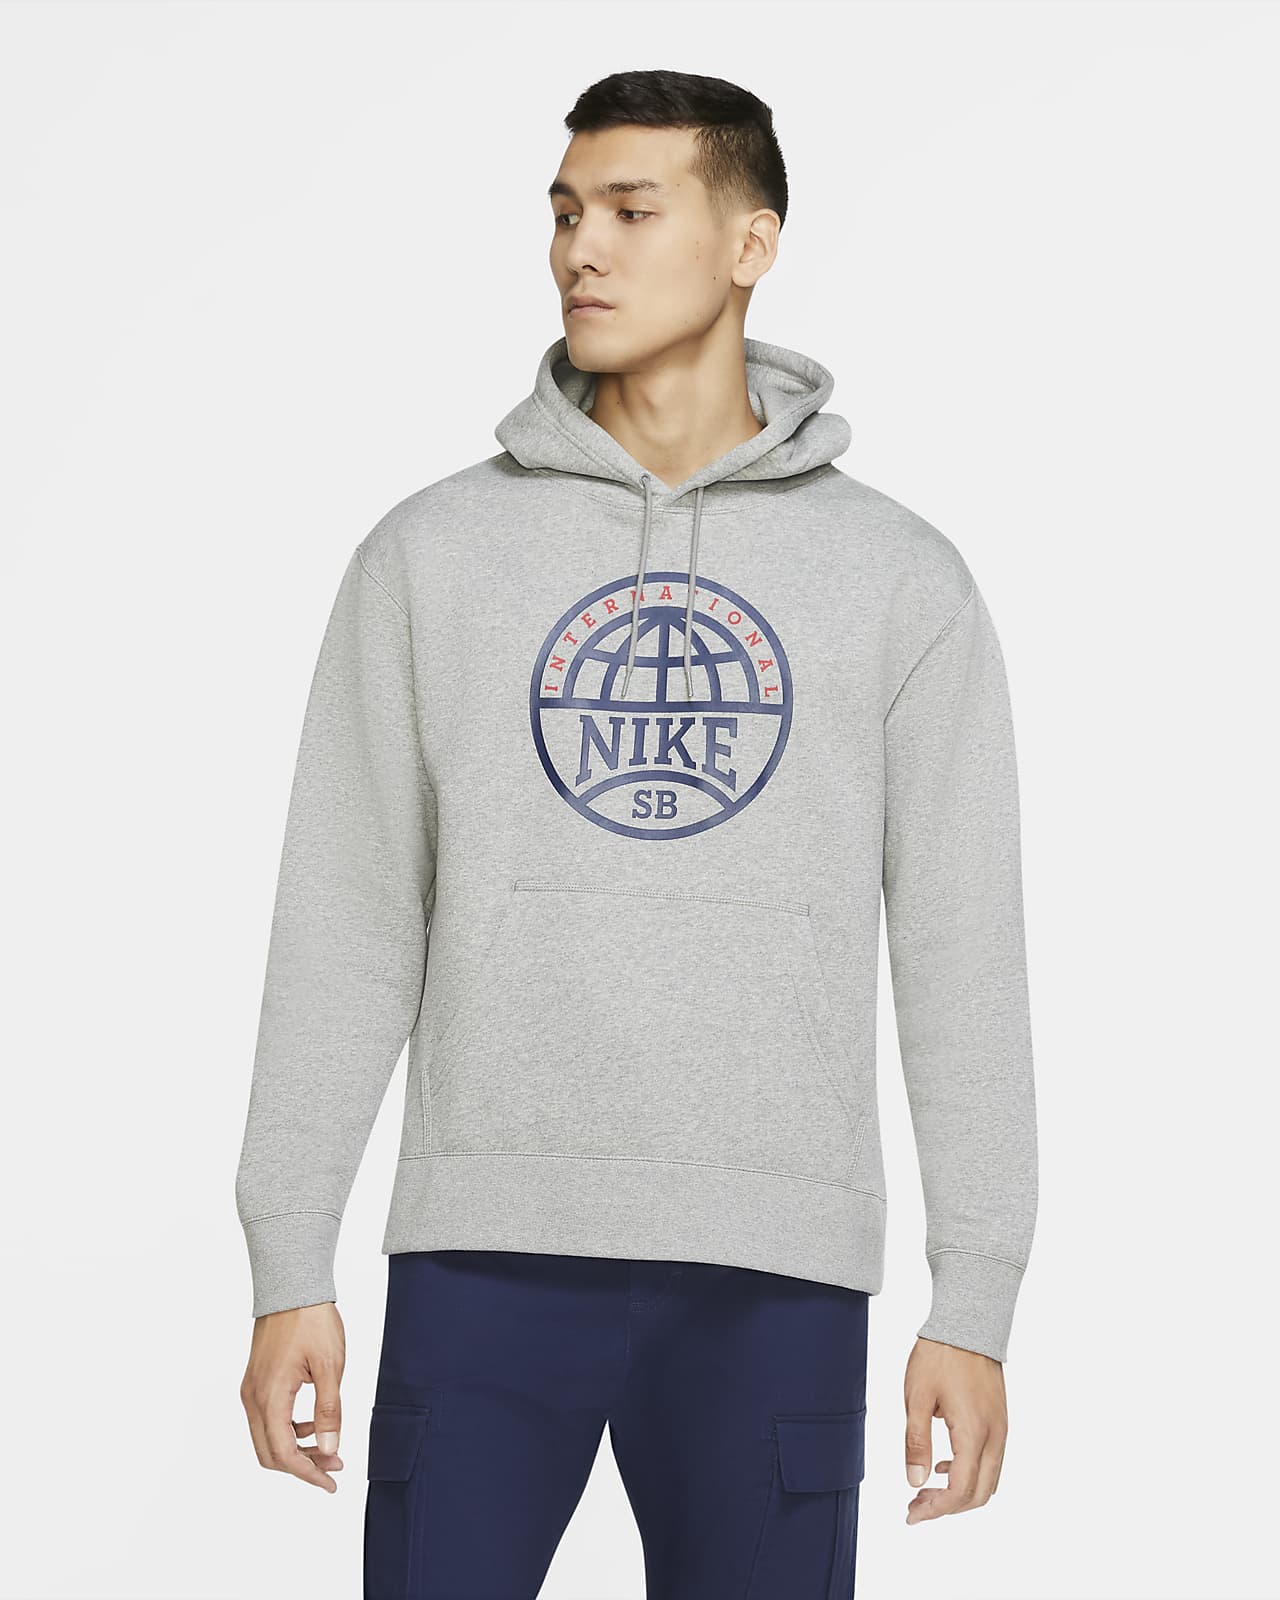 nike hoodie graphic